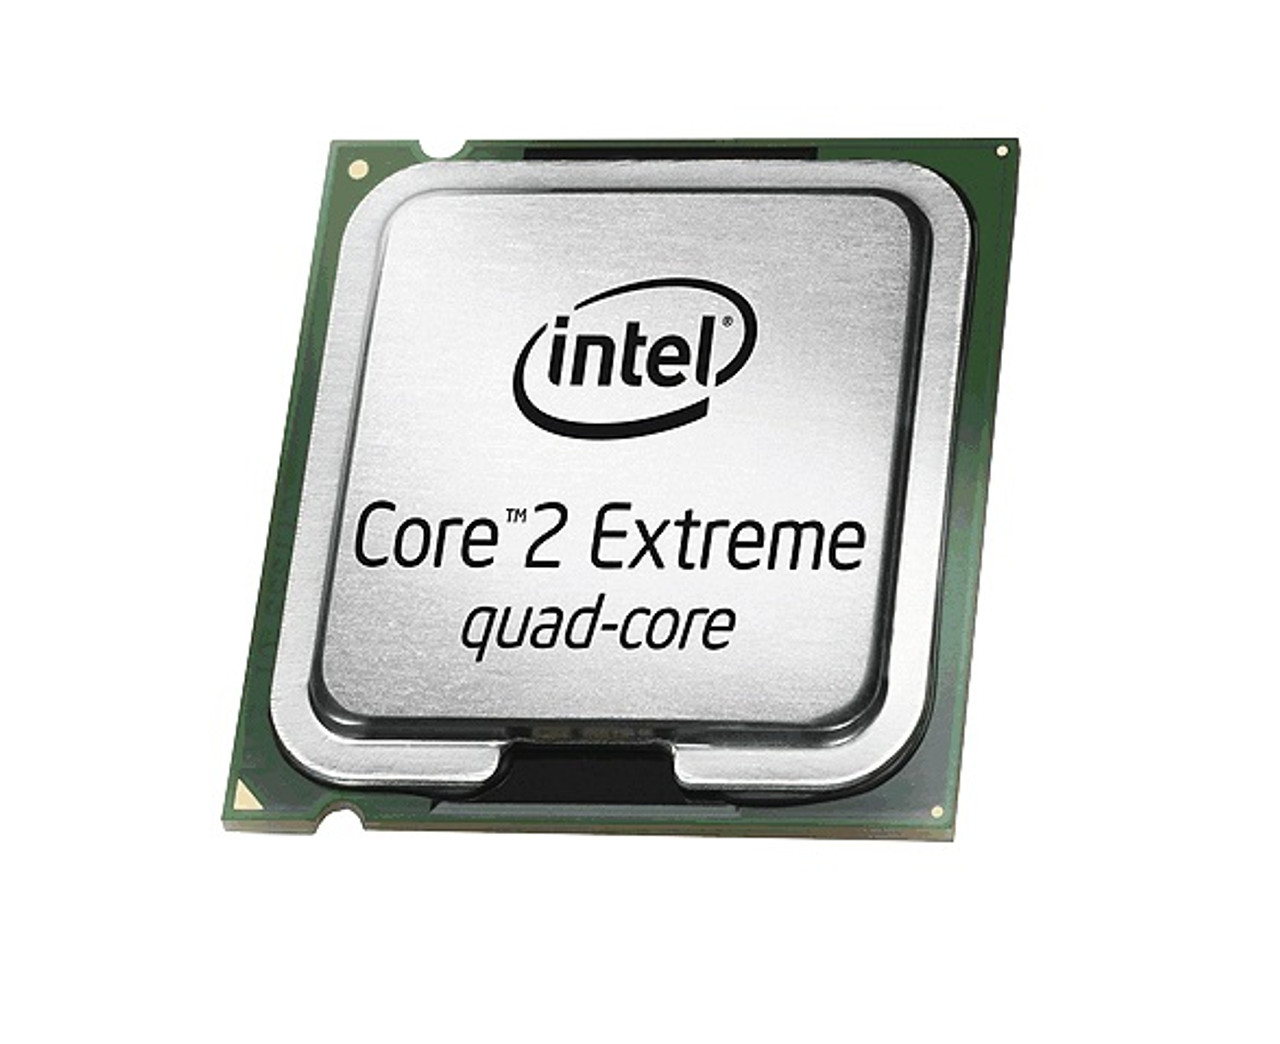 SLAF4 - Intel Core 2 Extreme X7900 Dual Core 2.80GHz 800MHz FSB 4MB L2 Cache Socket PPGA478 Mobile Processor